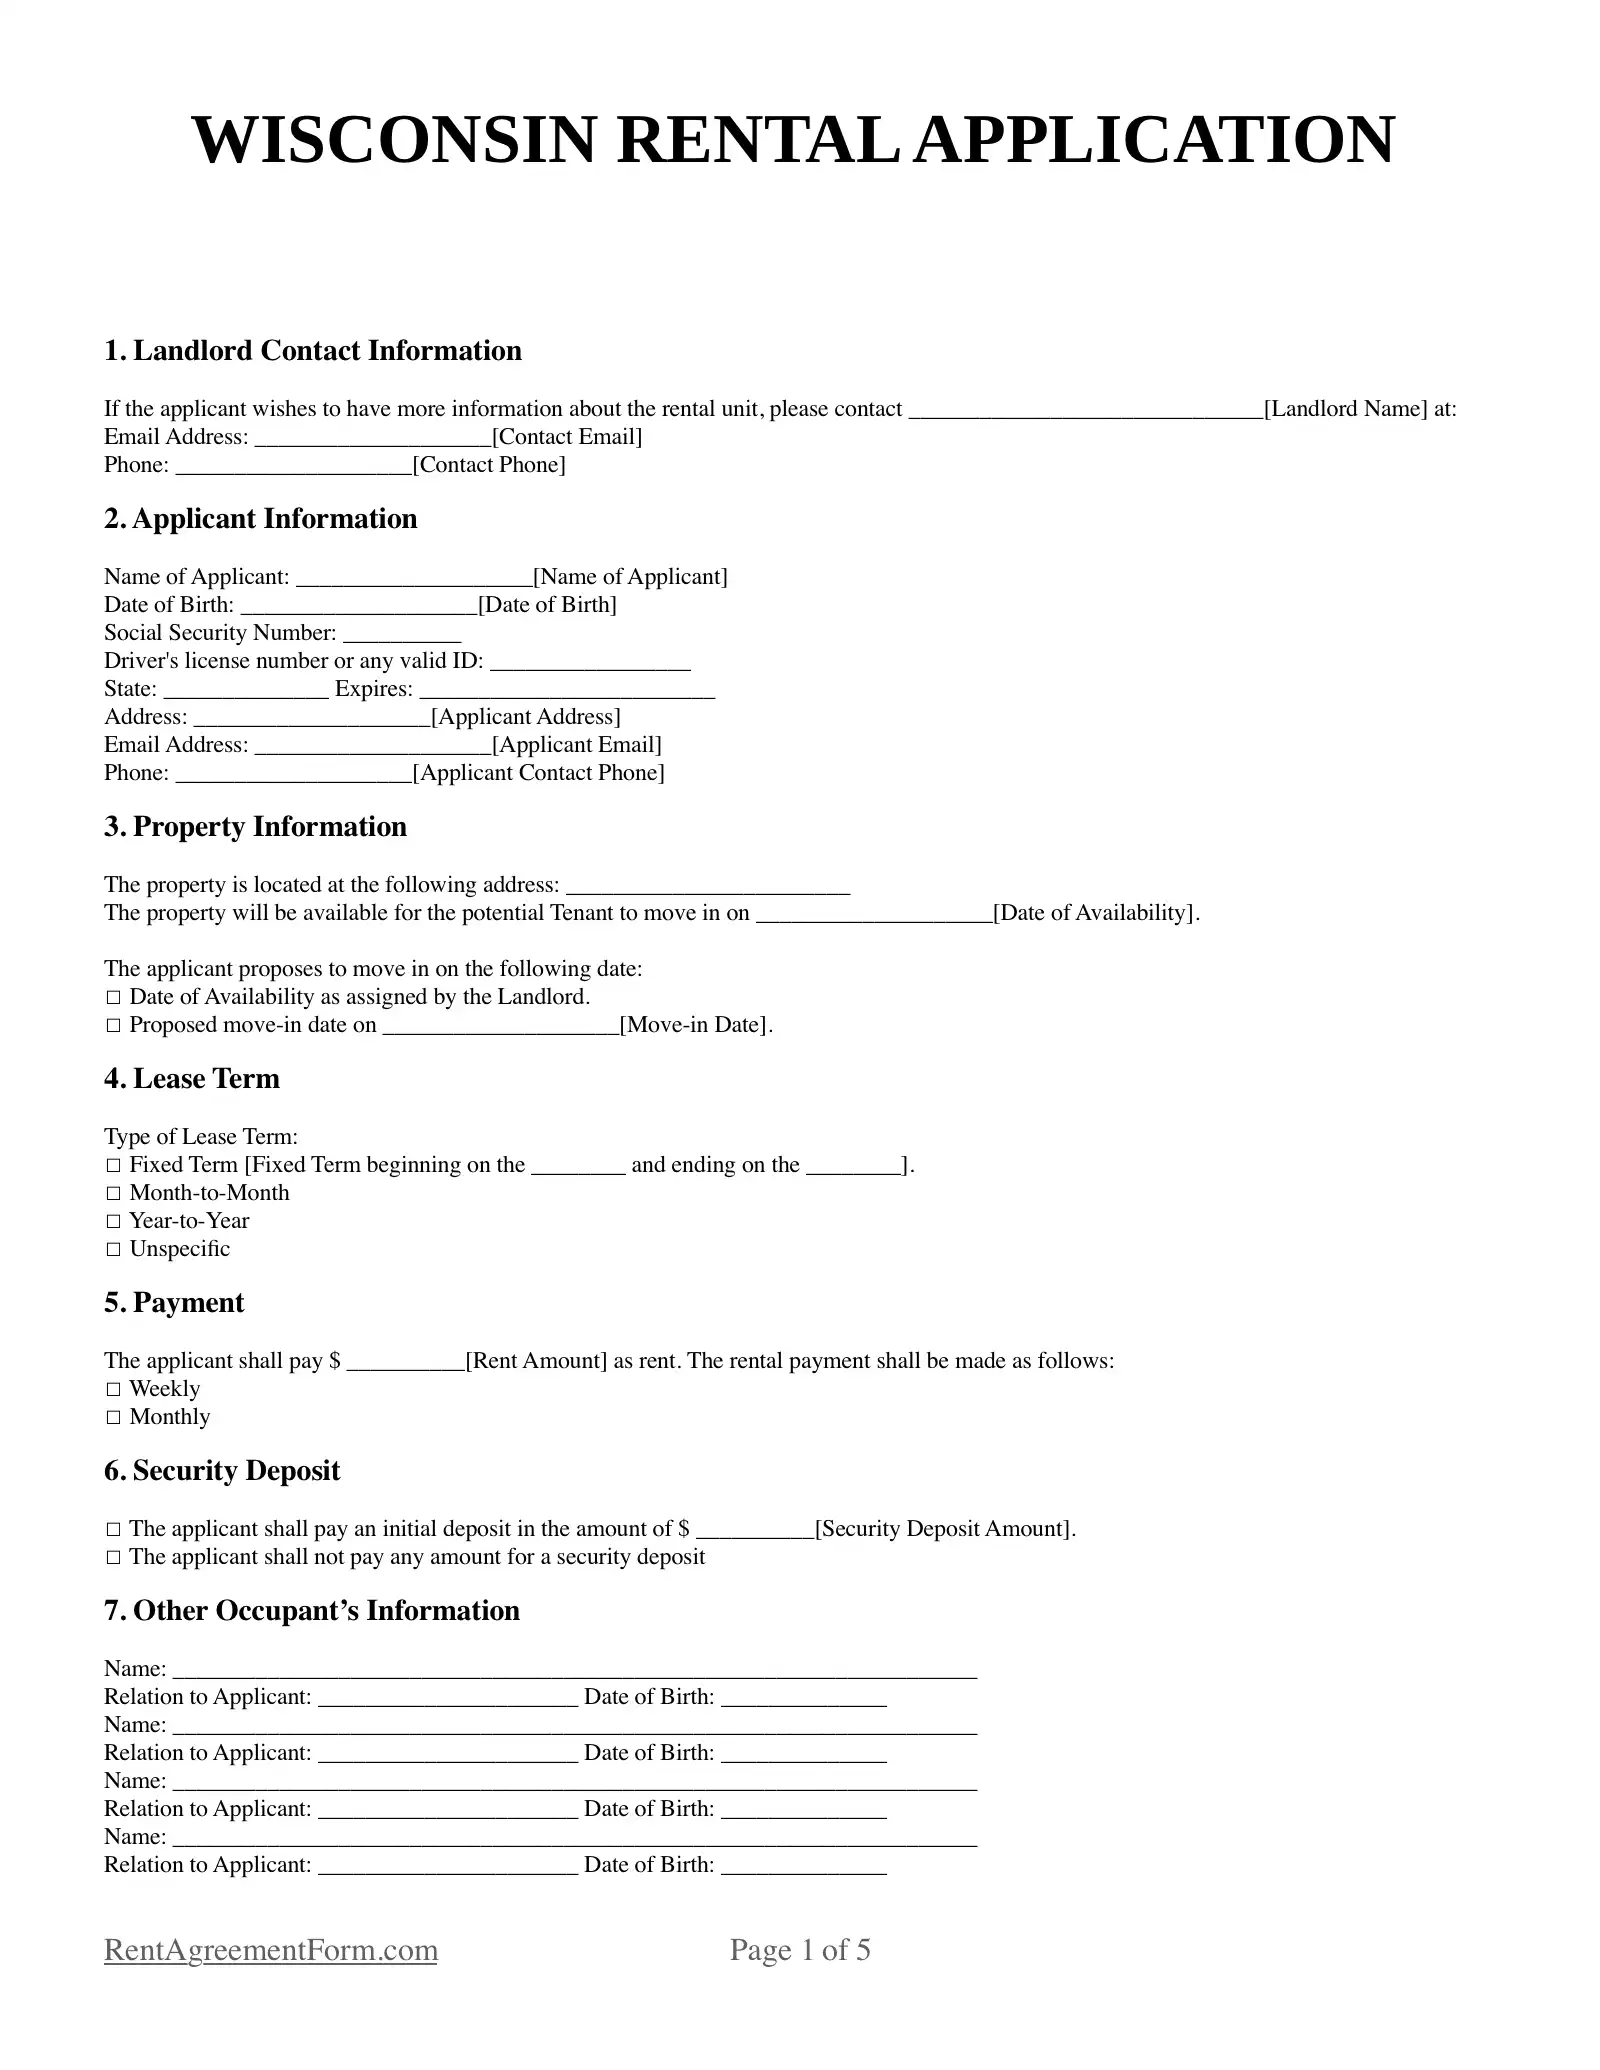 Wisconsin Rental Application Sample